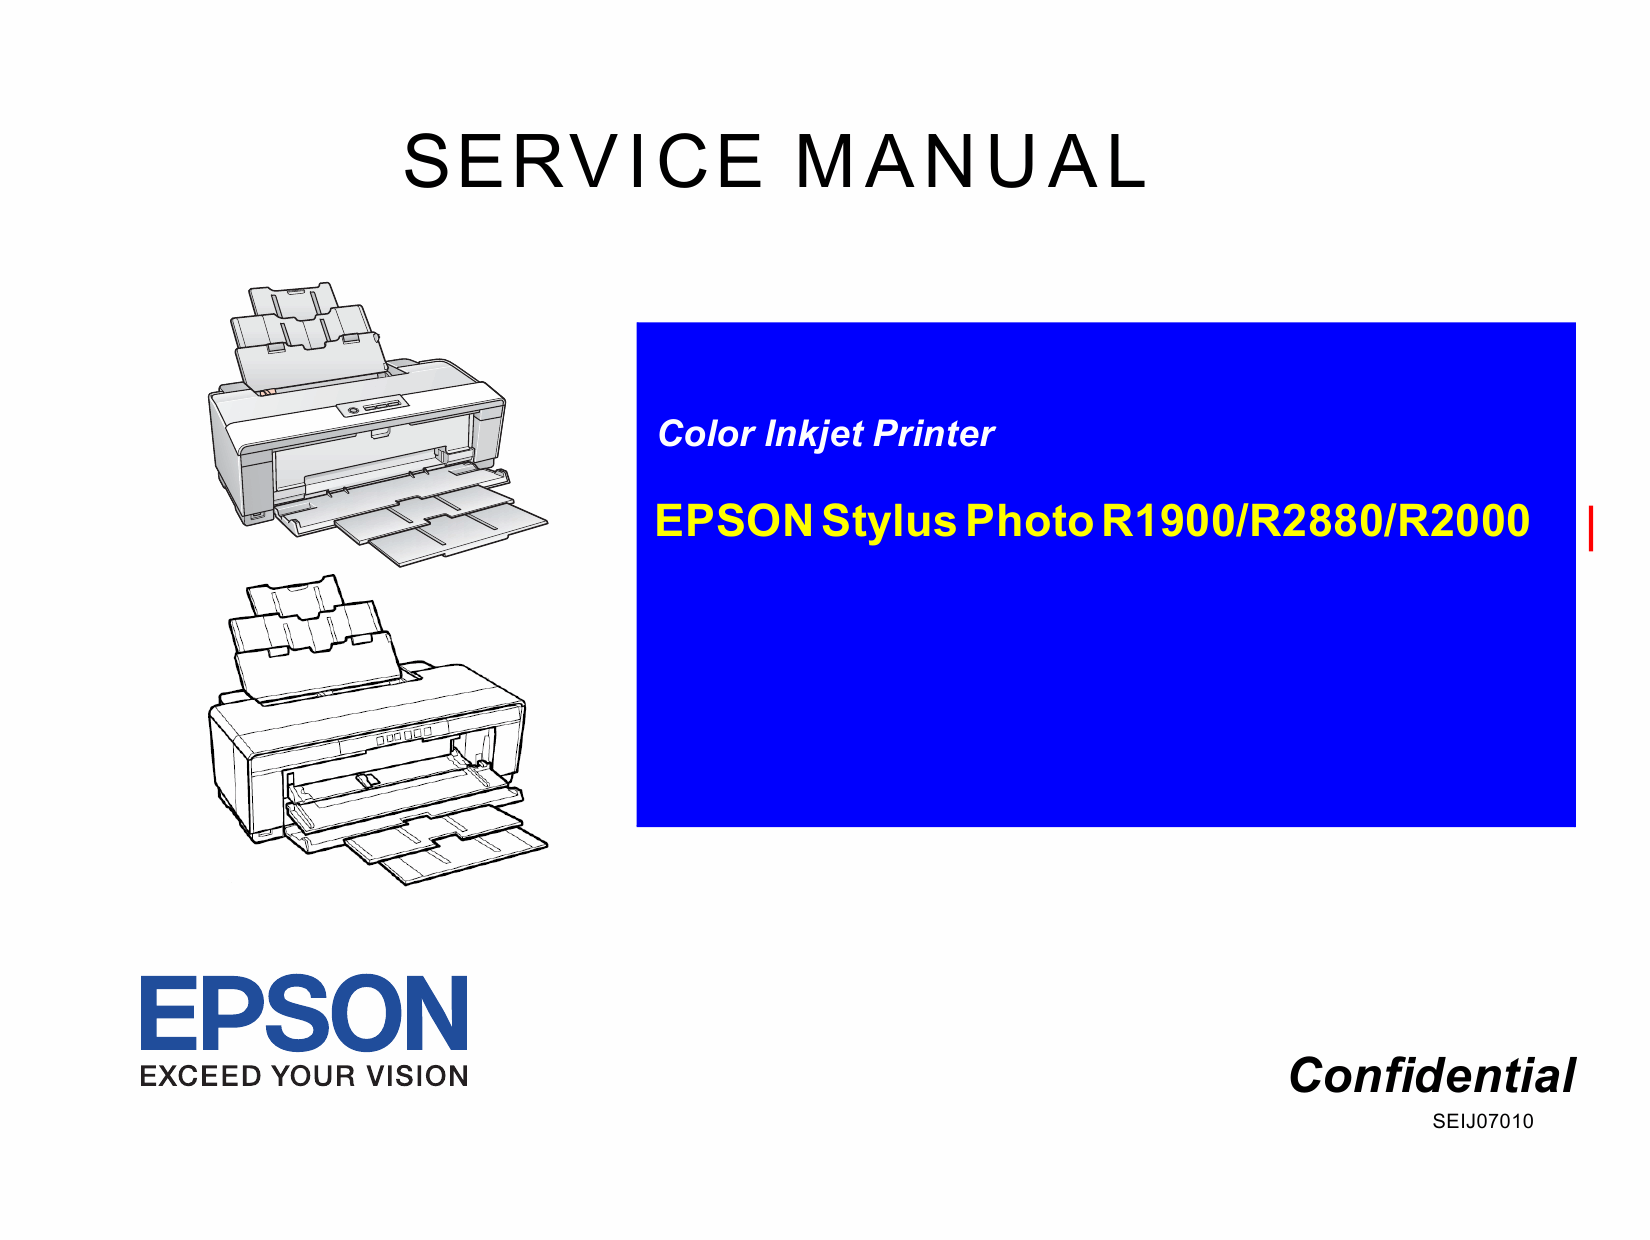 EPSON StylusPhoto R2000 Service Manual-1